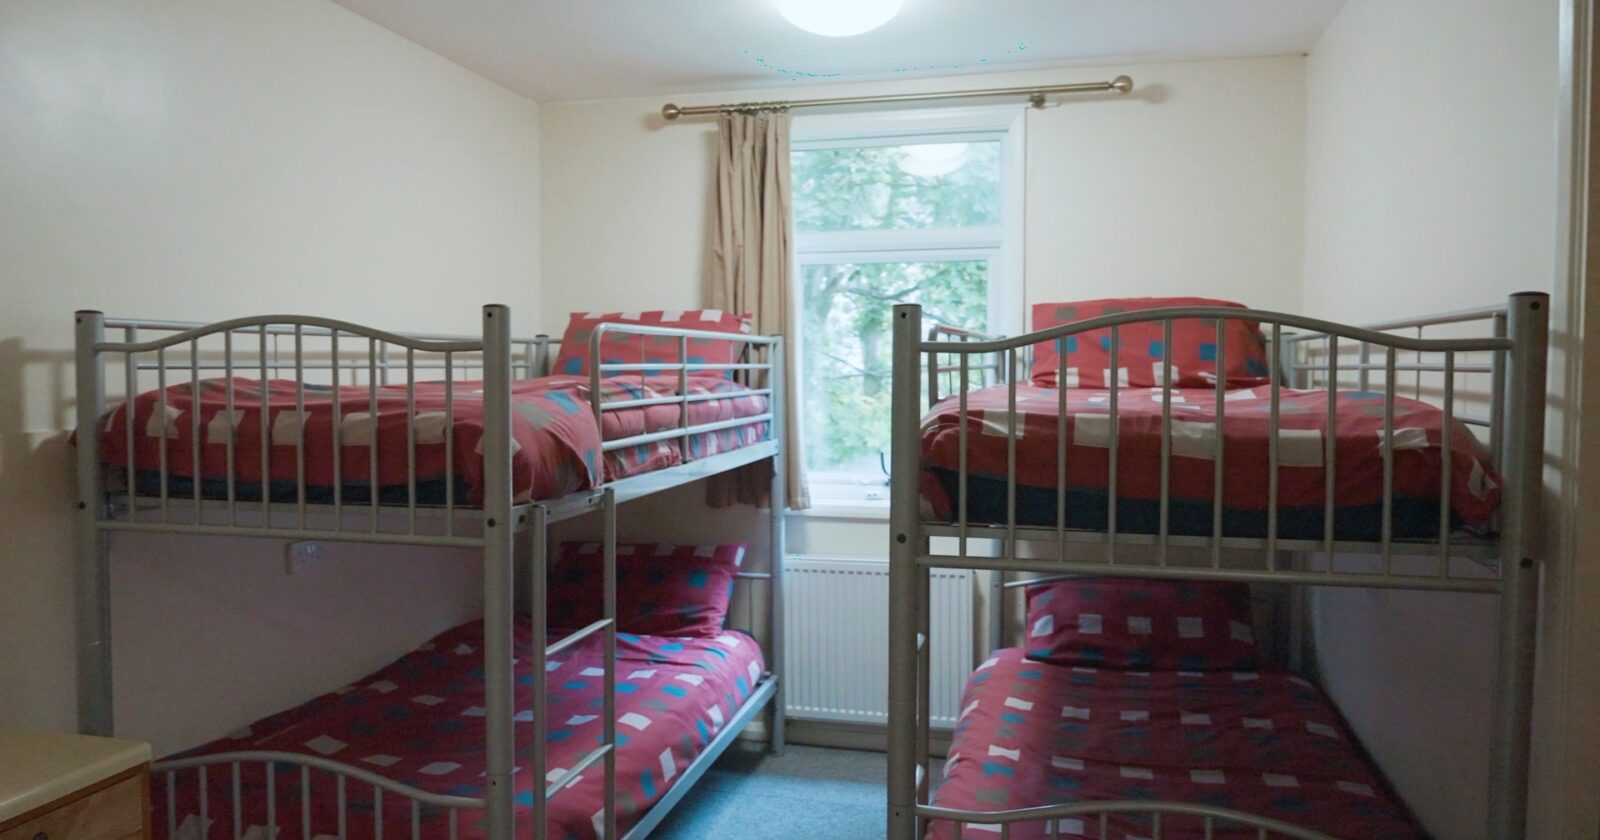 bunk beds cumulus dormitory